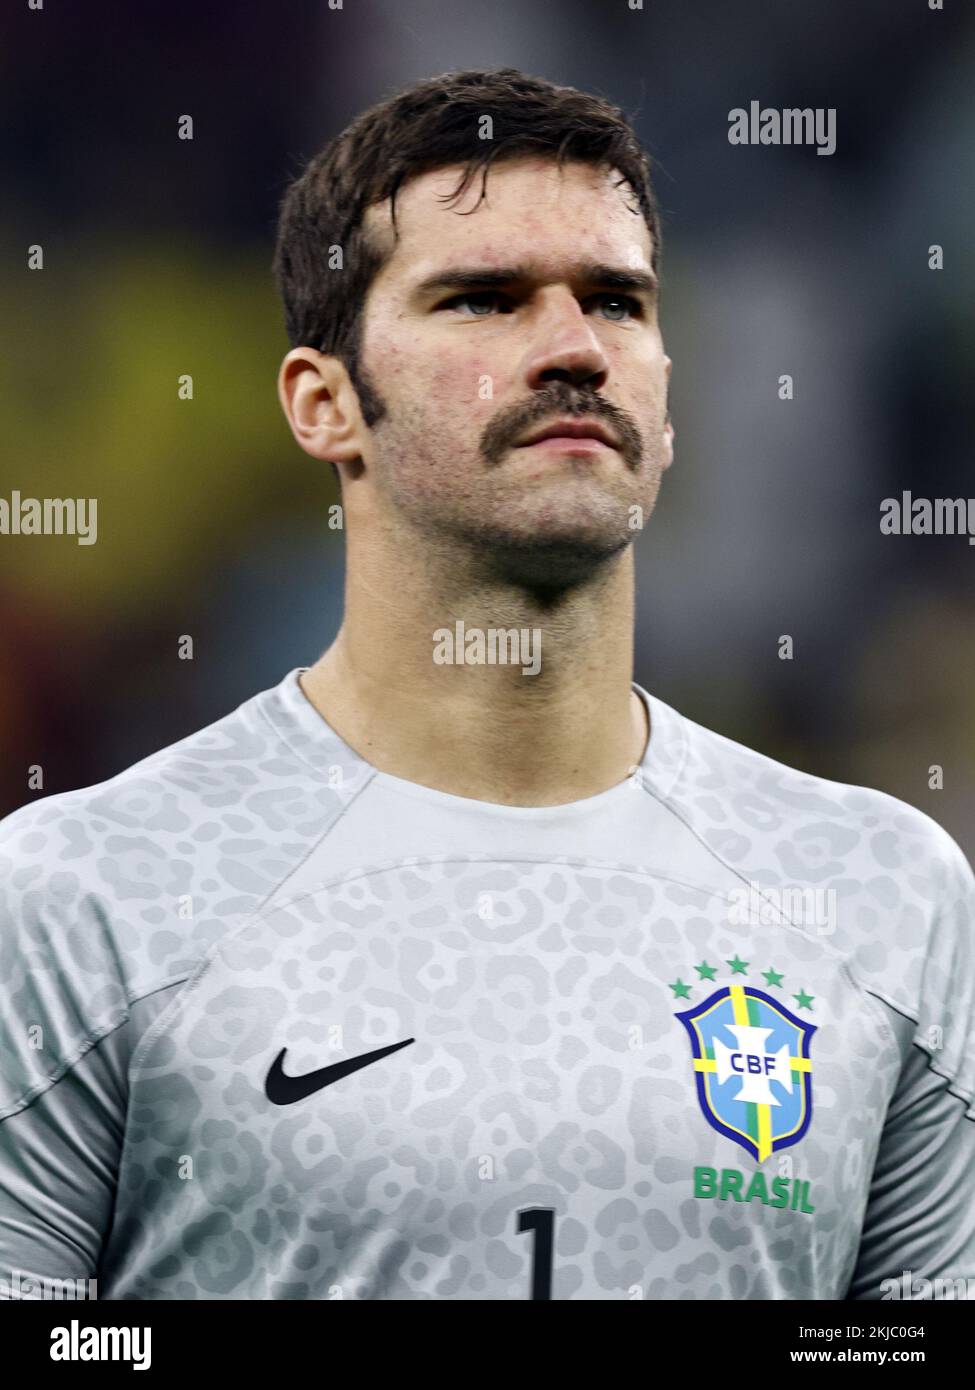 brazil goalkeeper 2022 jersey